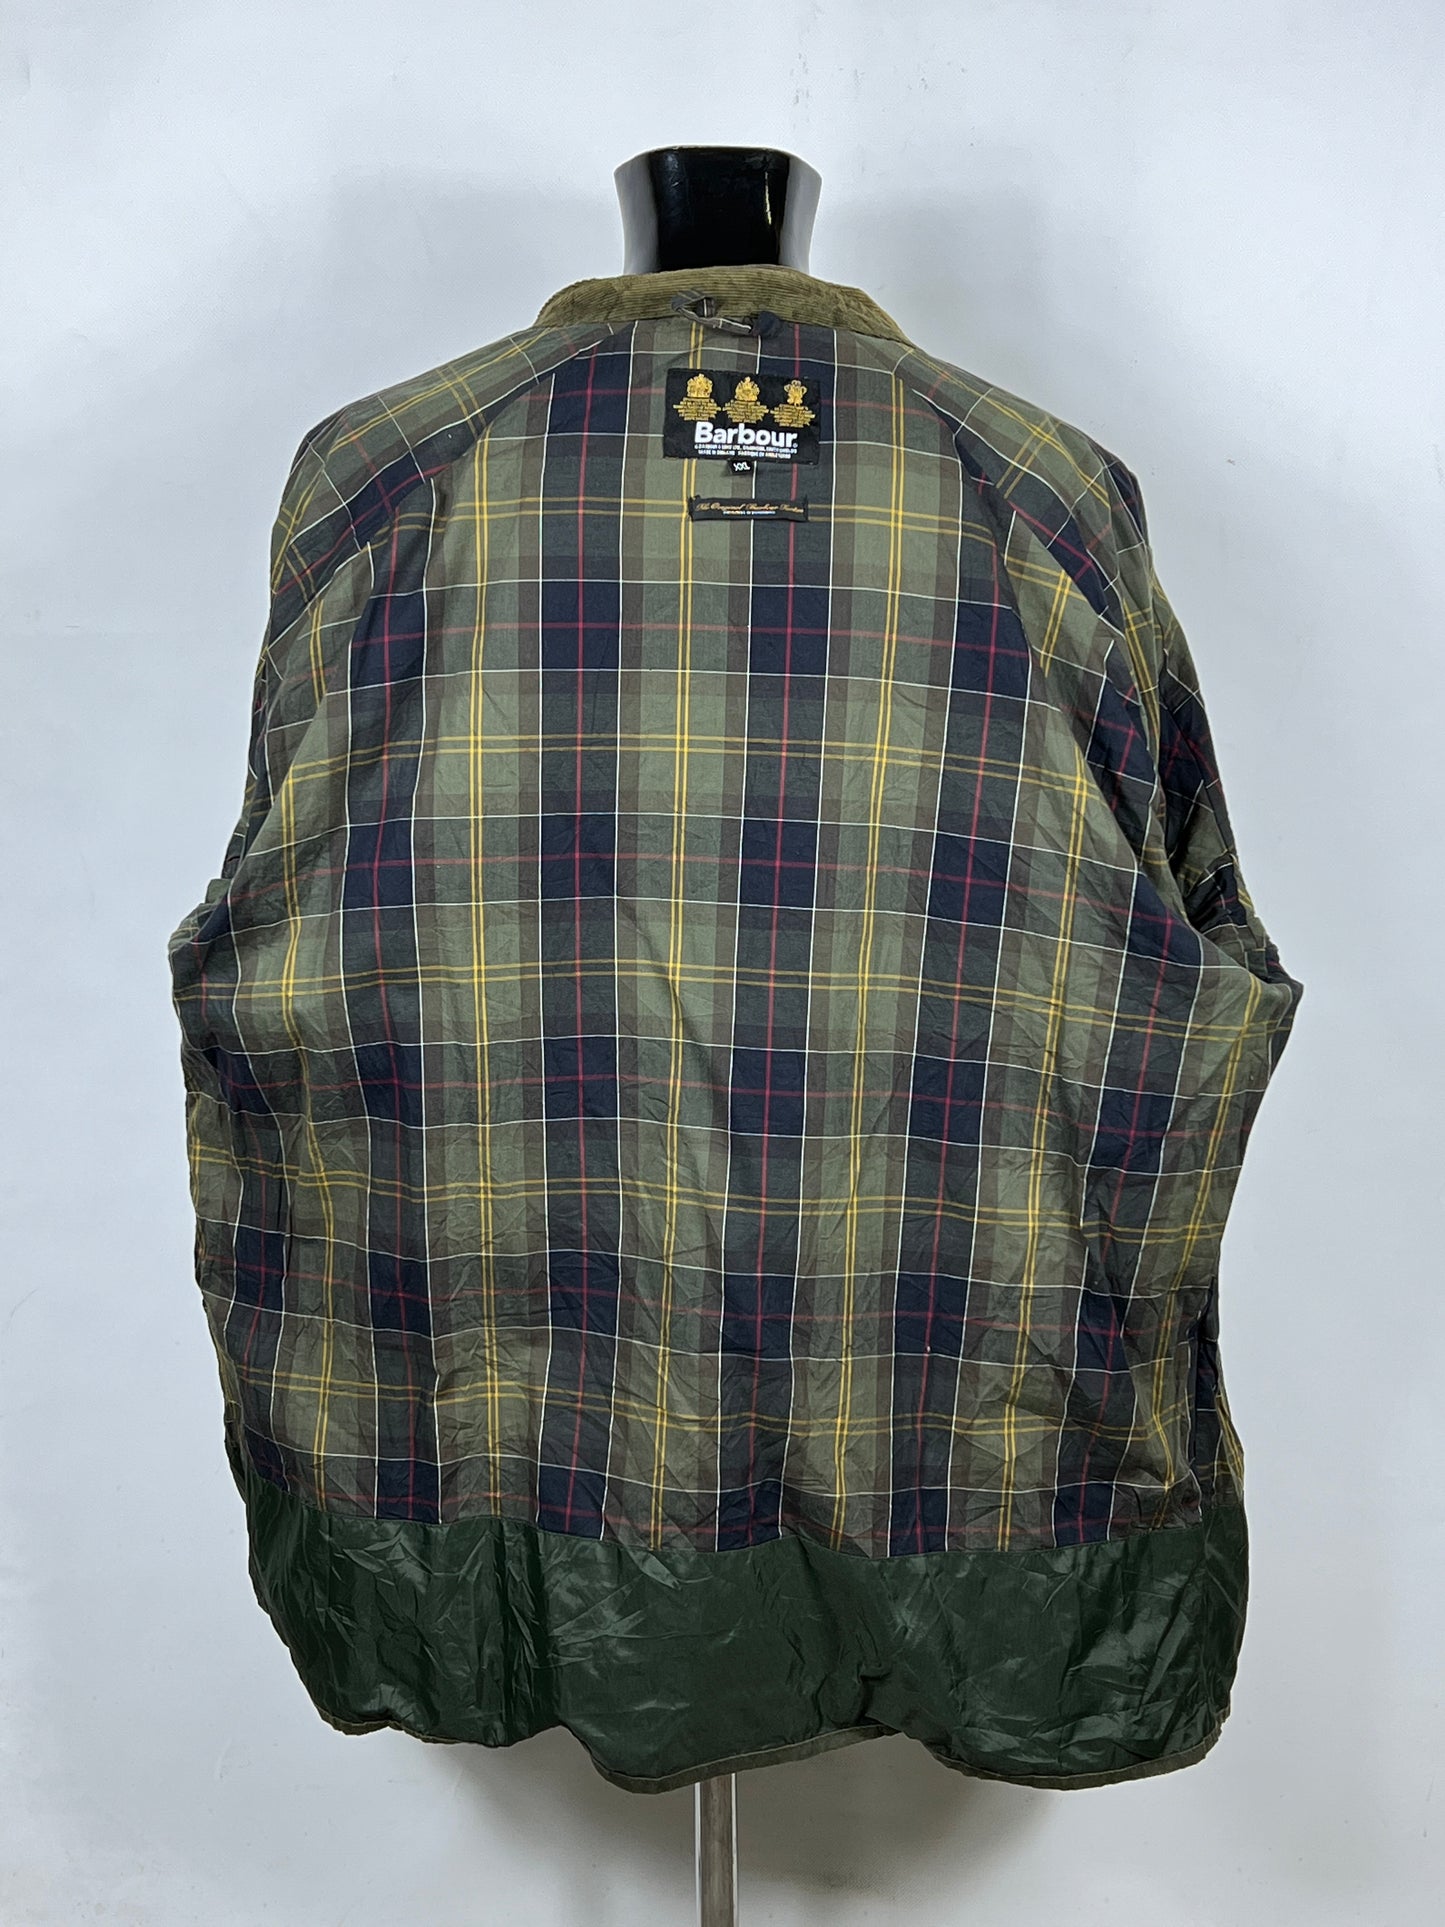 Giacca Uomo Barbour Cerata Verde Uomo XXLarge Beaumont Green Man Jacket Size 2xL